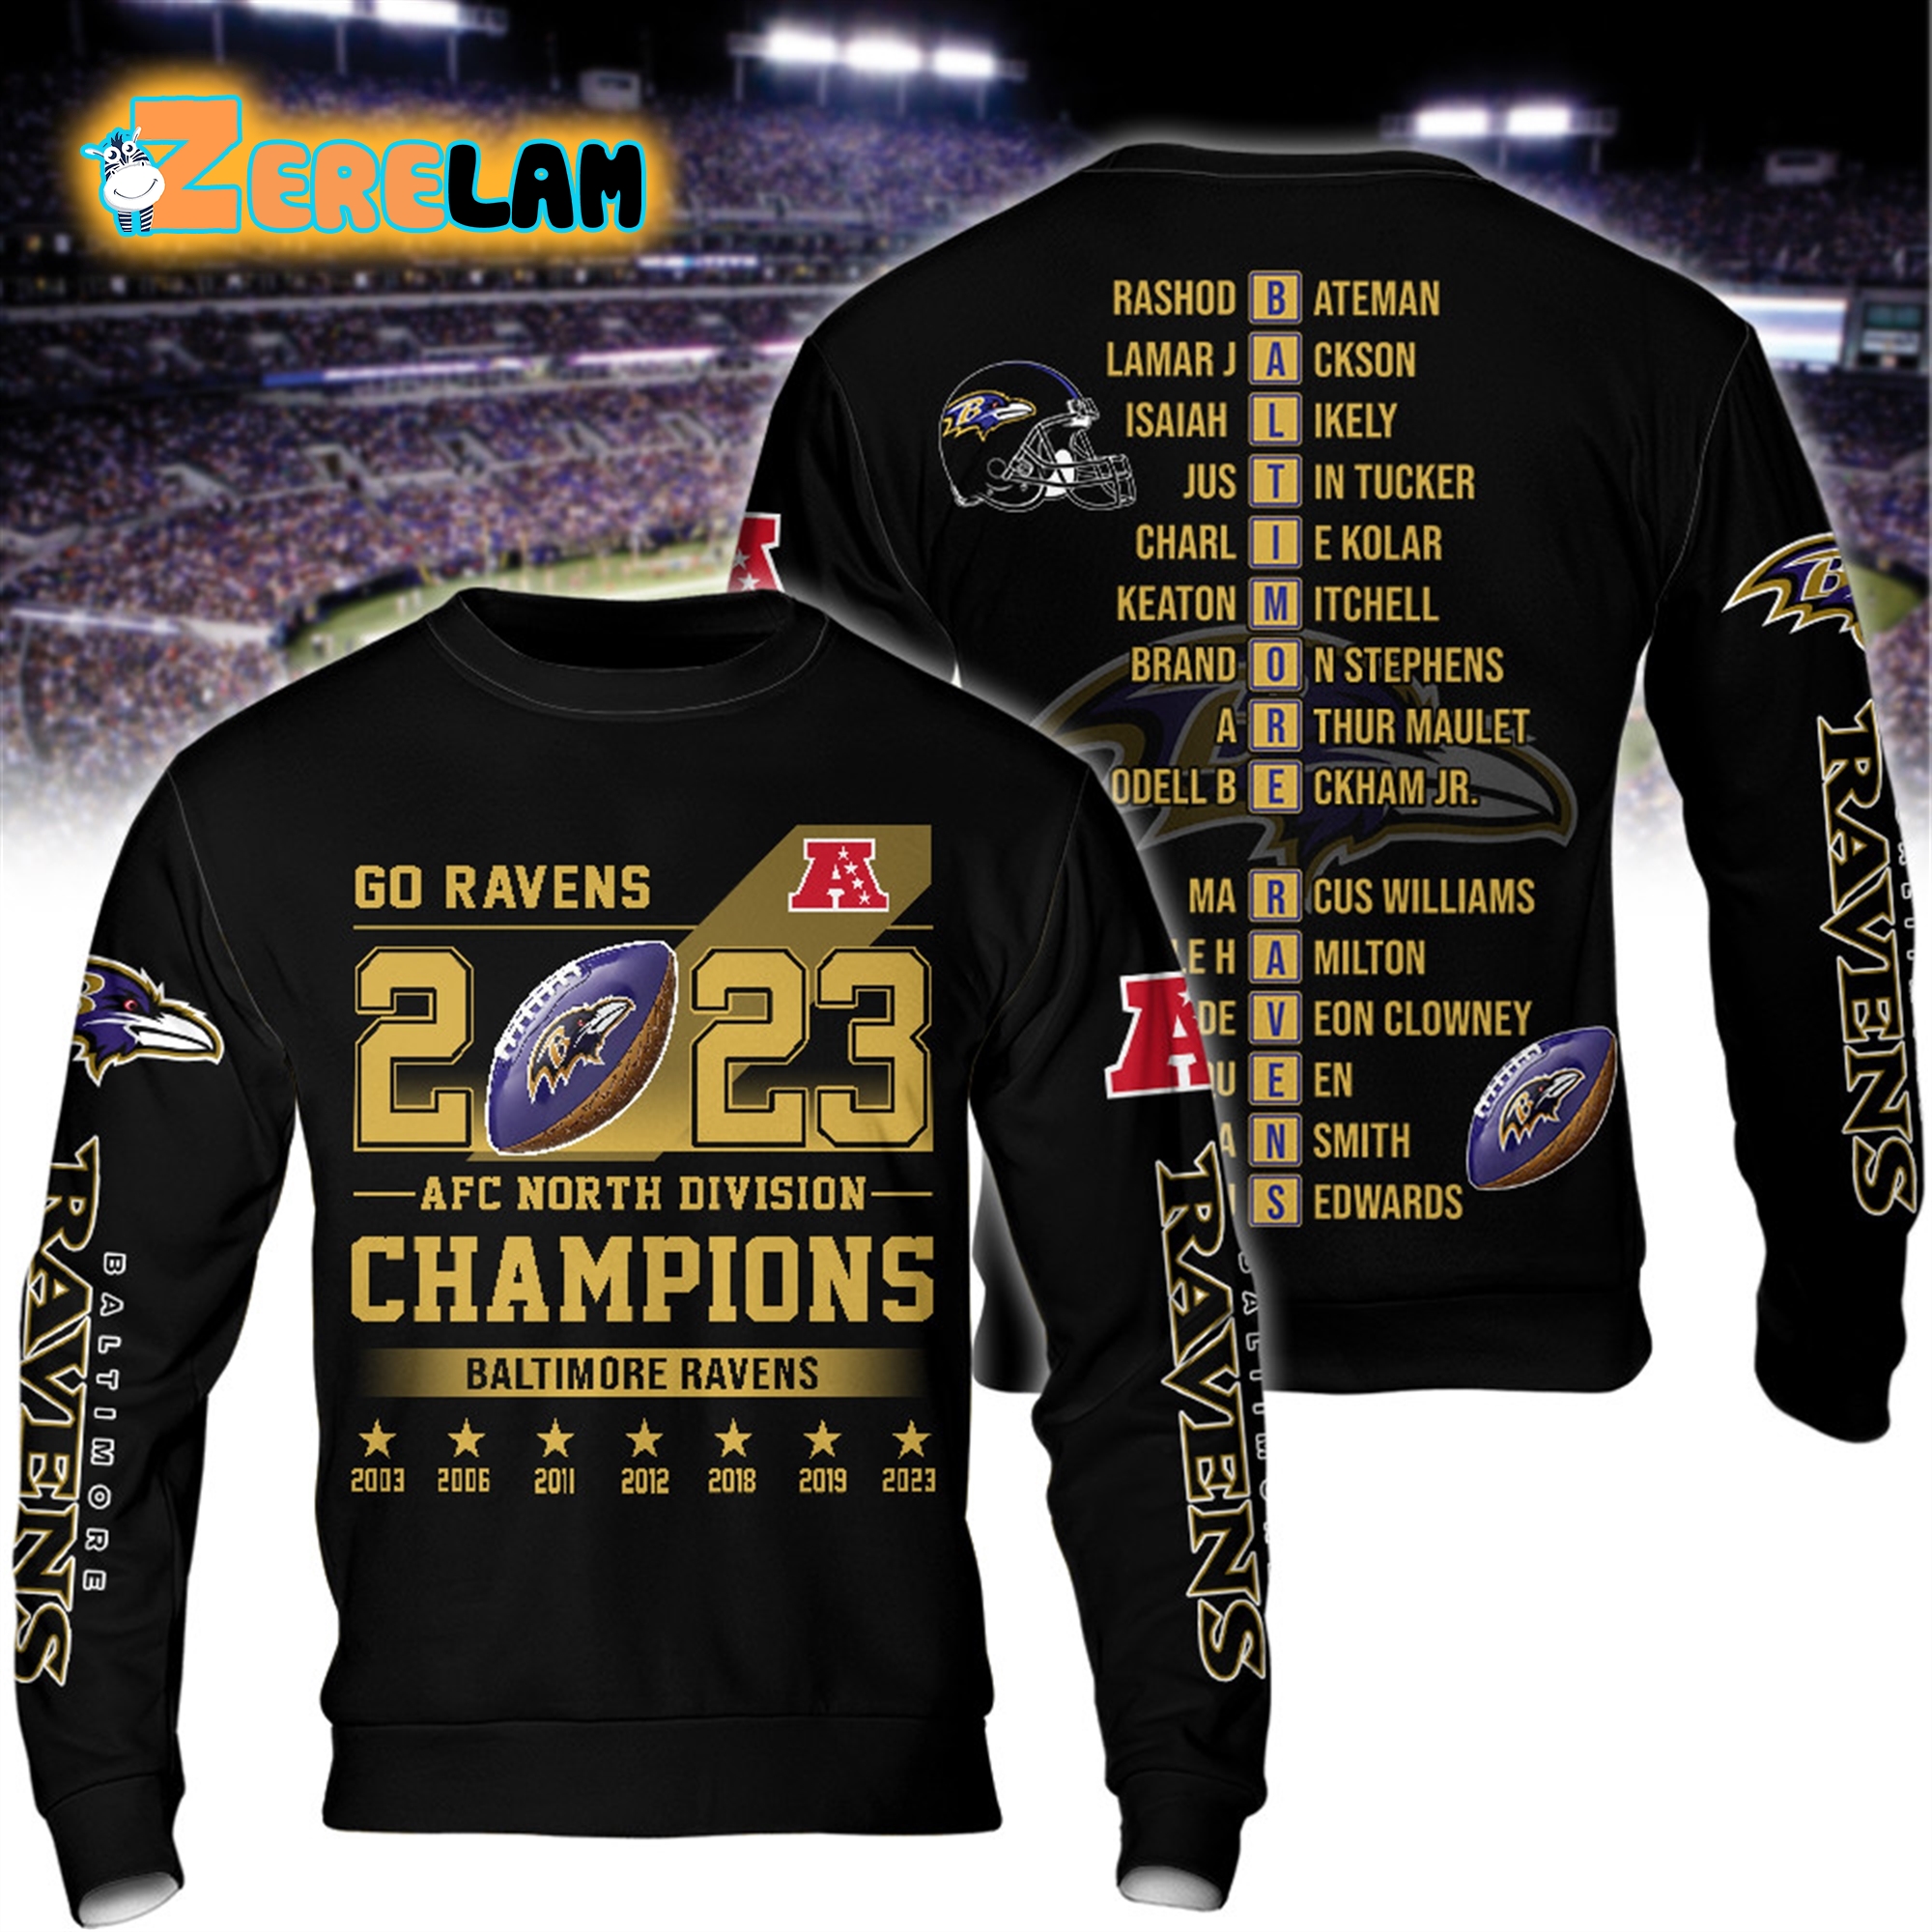 Go Ravens 2023 AFC North Division Champions Ravens Shirt - Zerelam